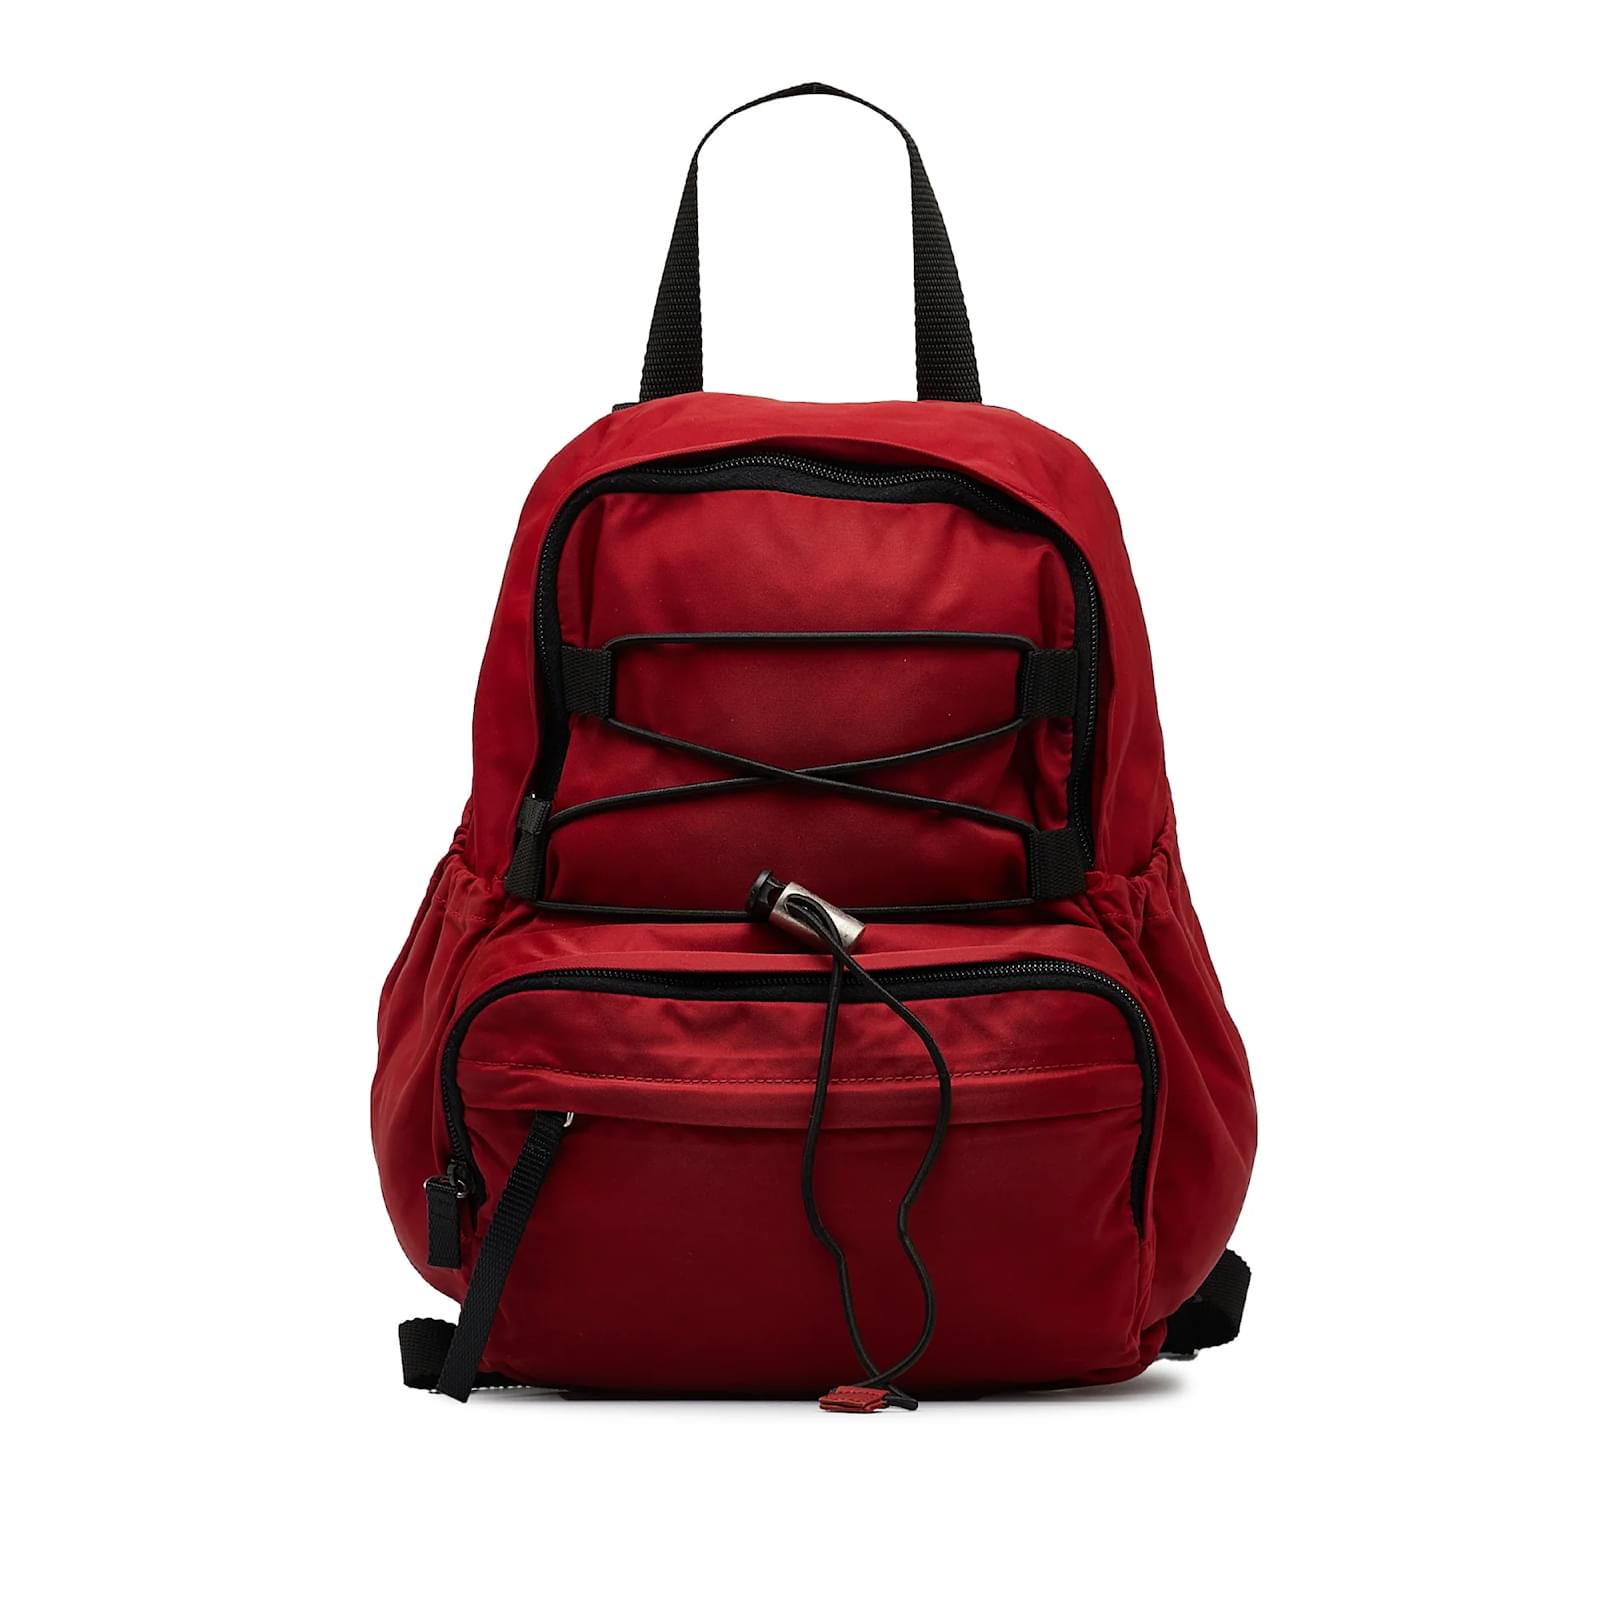 Prada mini-backpack w detachable chain strap for the BASIC ESSENTIALS. Cute  cute! adorable mini bags! #prada #minibags | Bags, Prada backpack, Prada bag